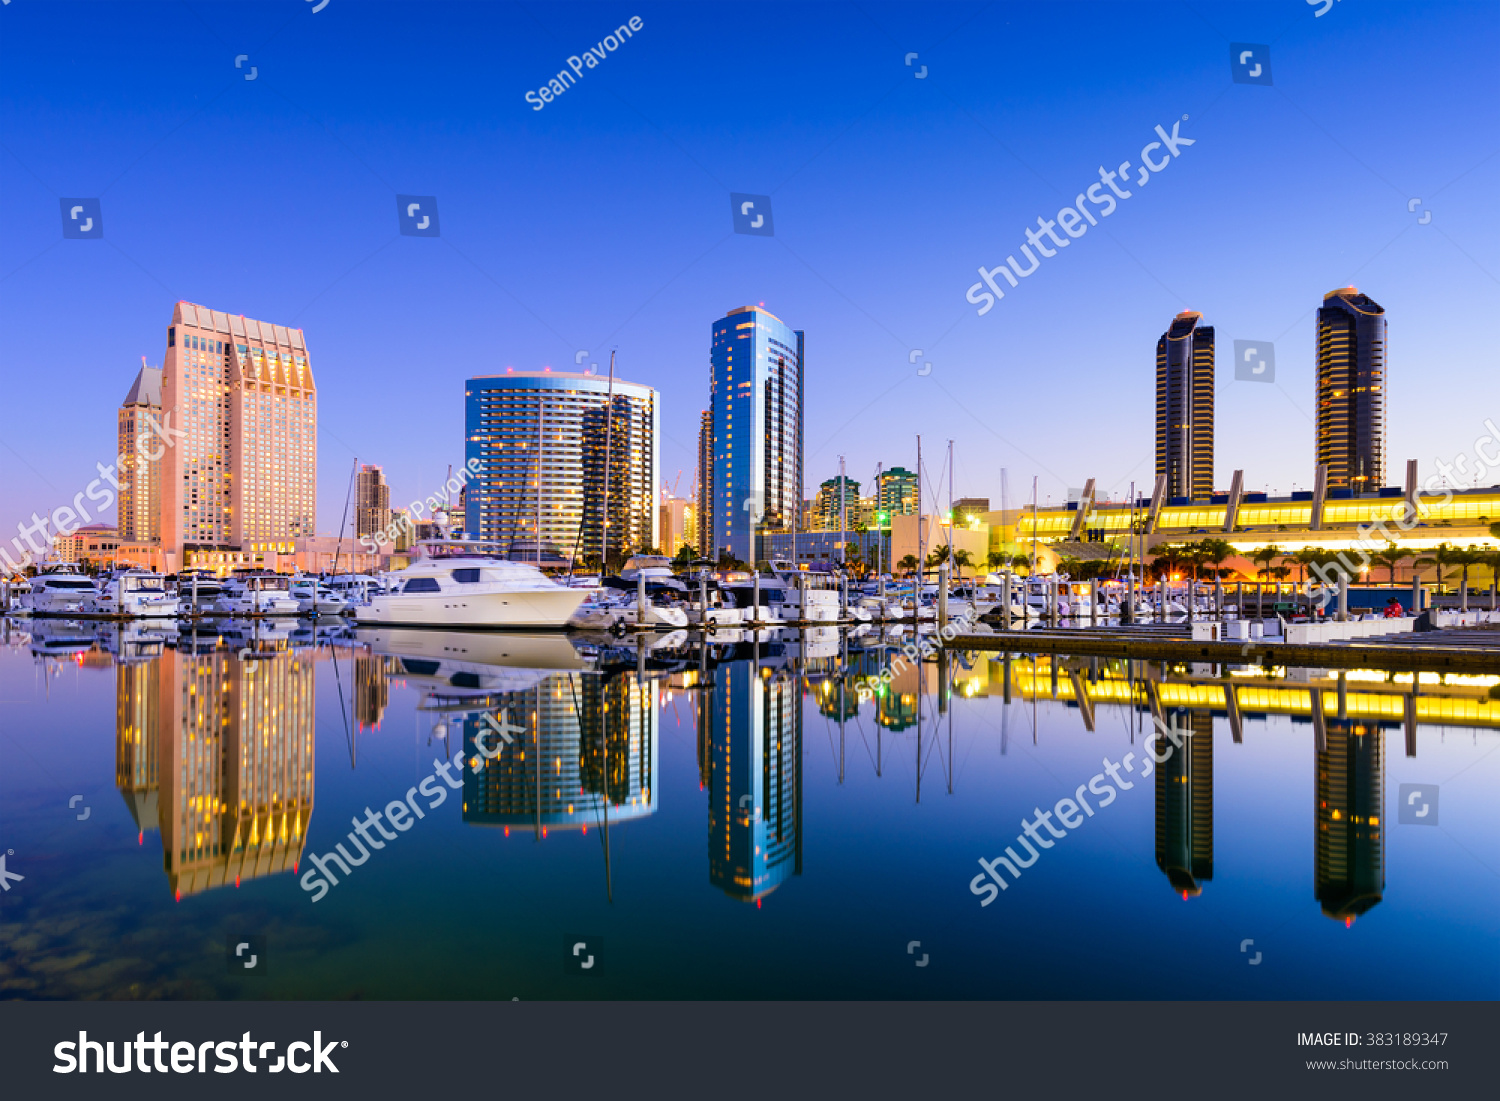 San Diego, California, USA skyline at the Embarcadero Marina. #383189347